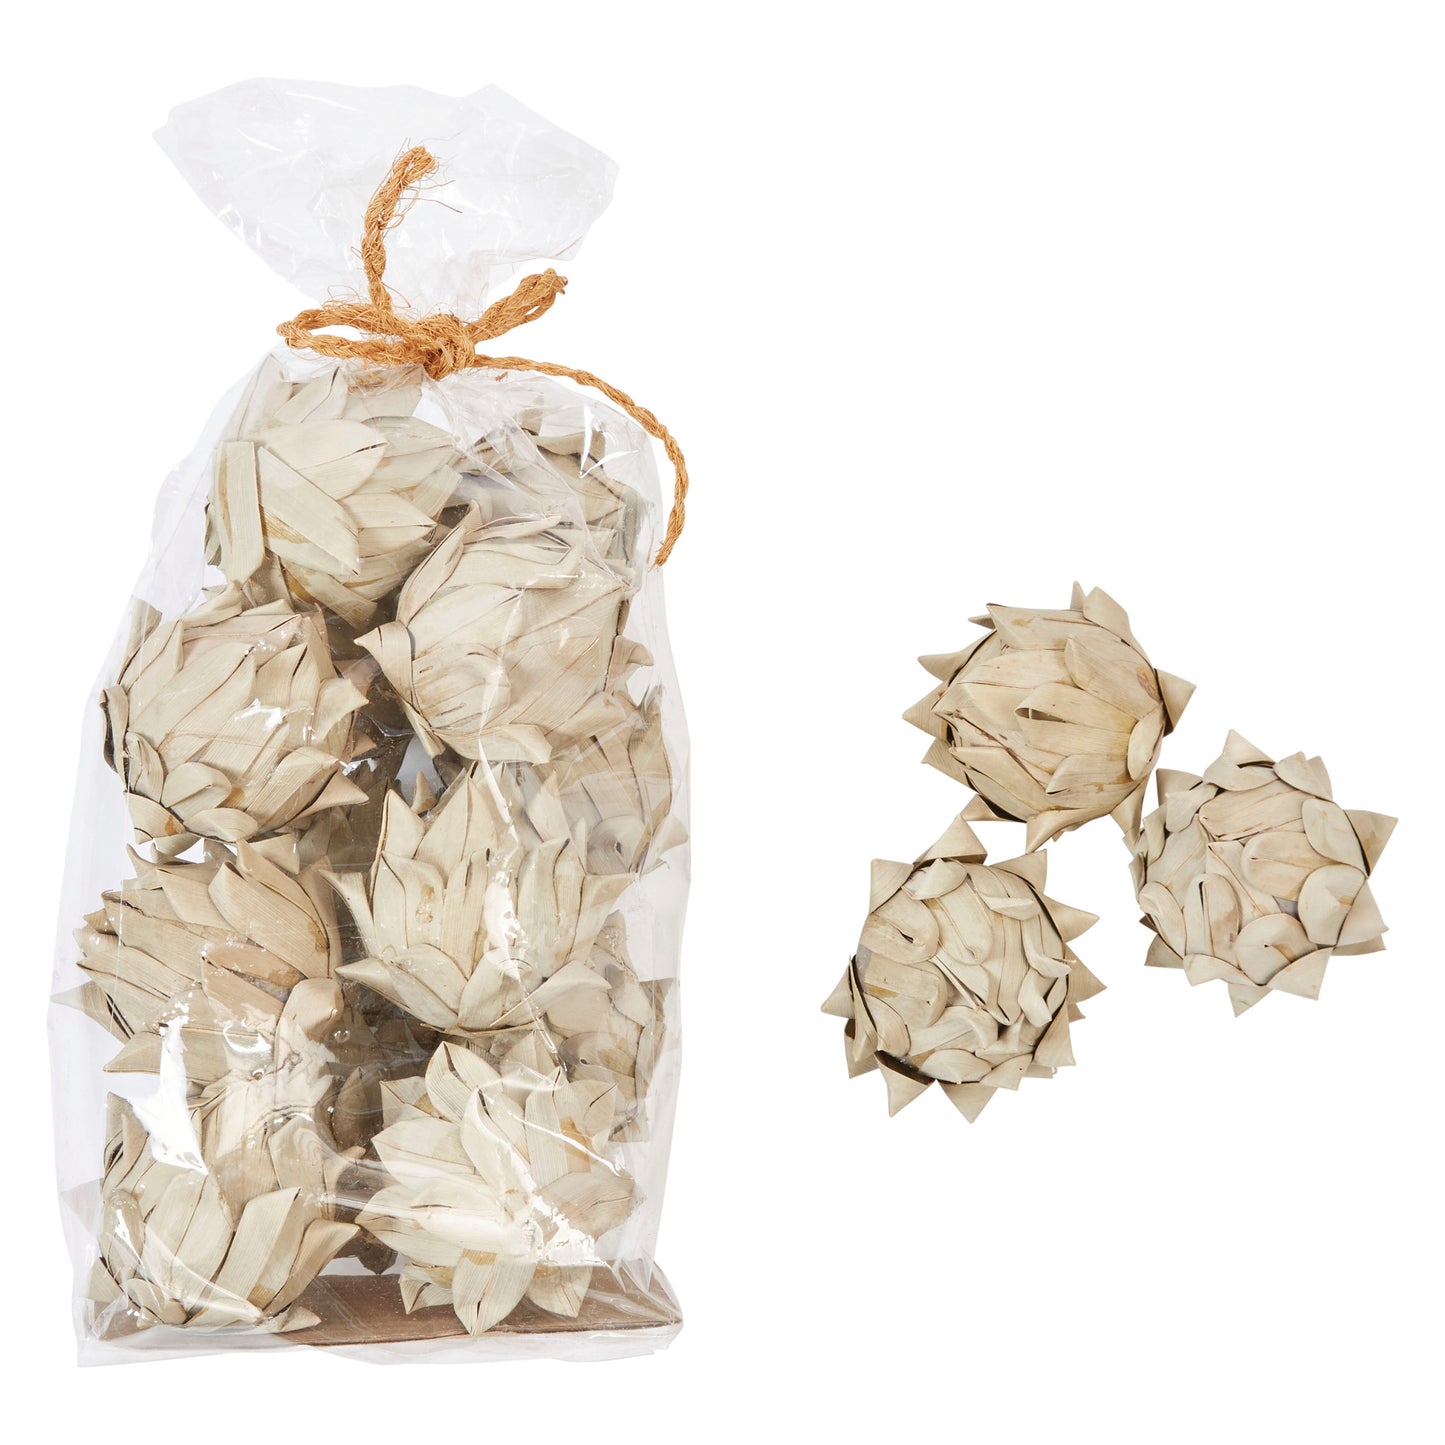 Handmade Dried Palm Leaf Artichokes in Bag